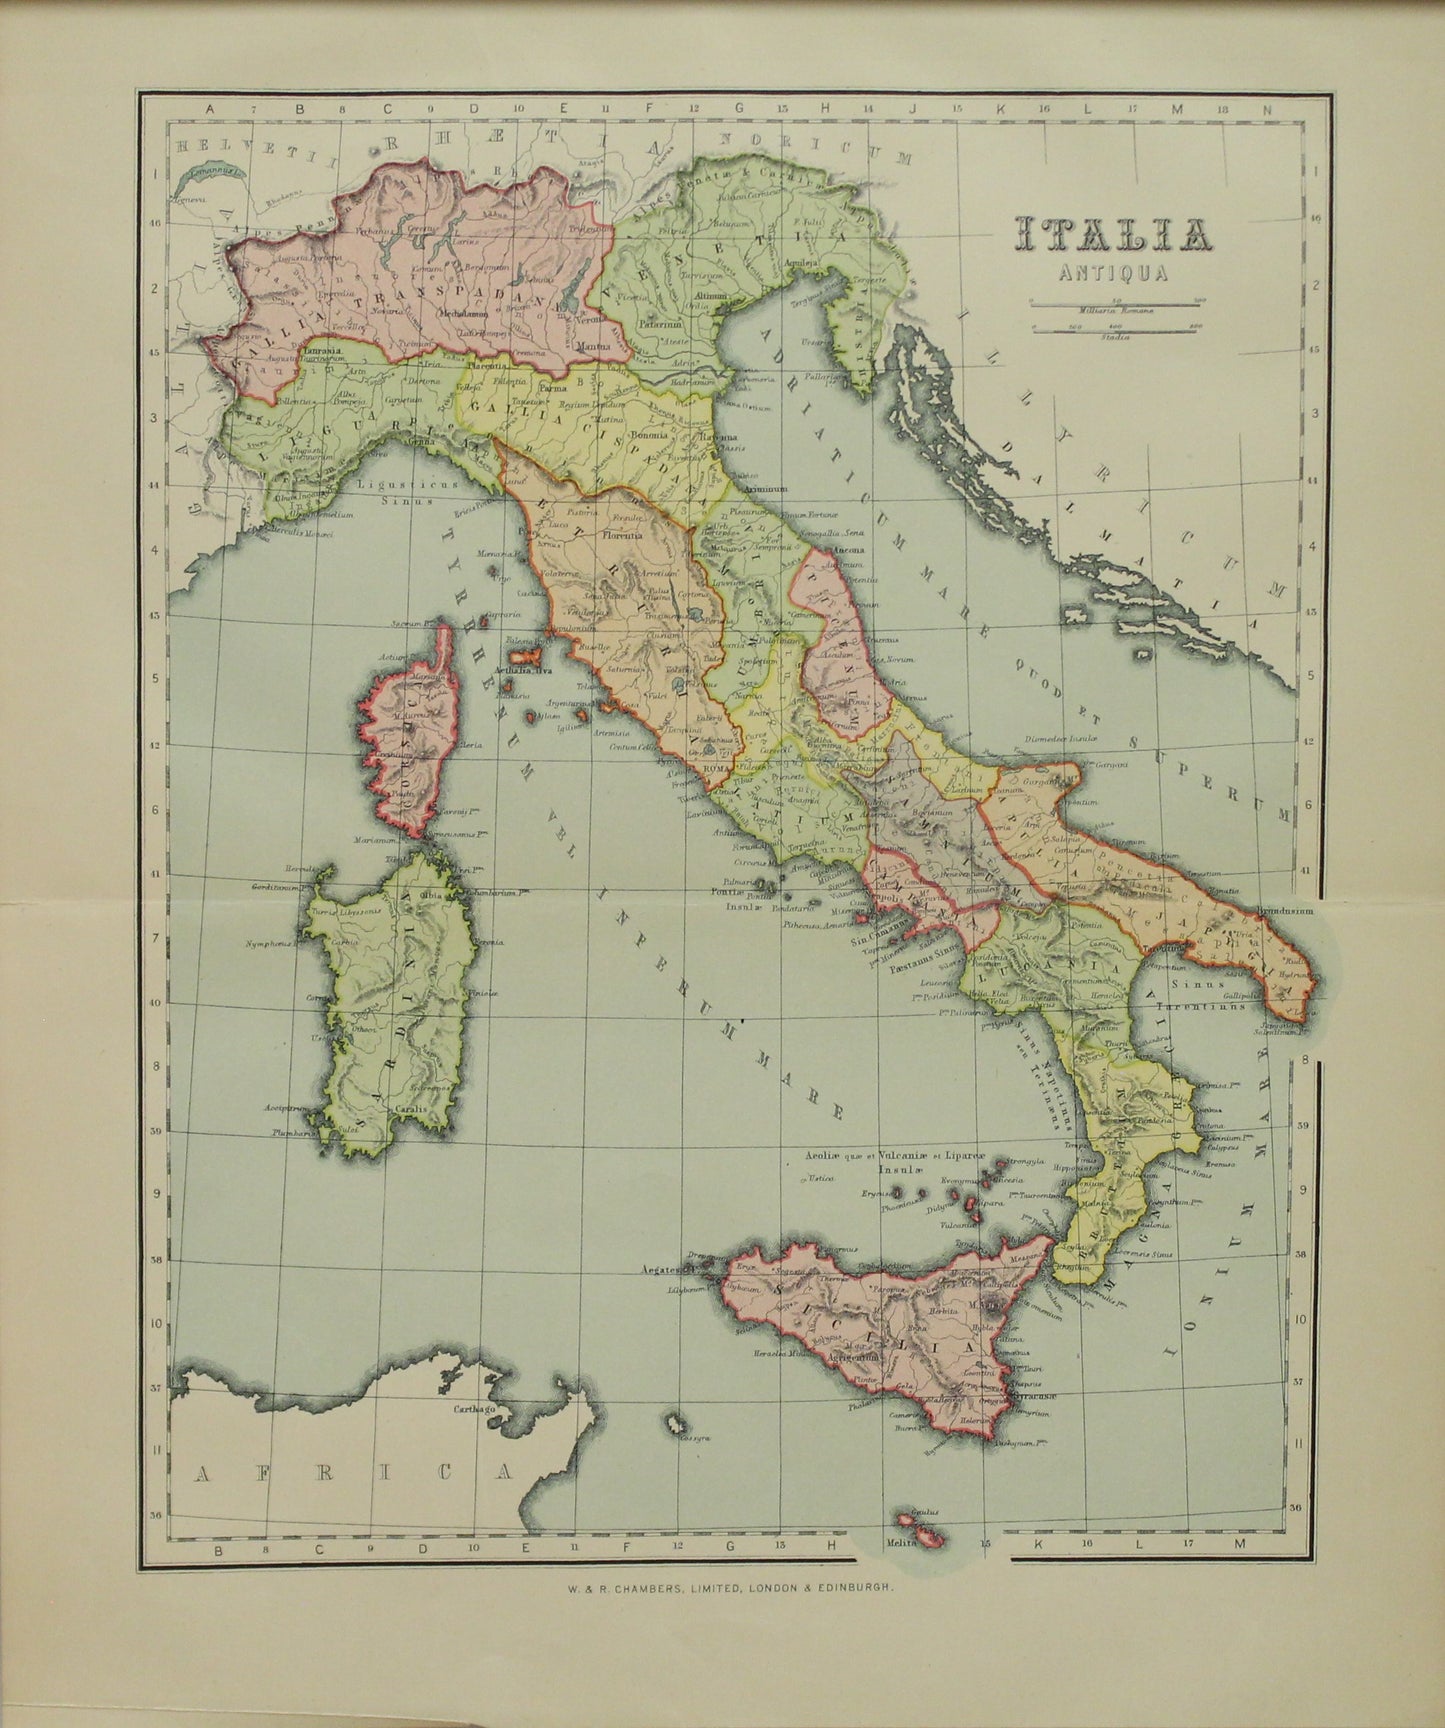 Map,Italia, Antiqua, W & R Chambers, London and Edinburgh. c1880